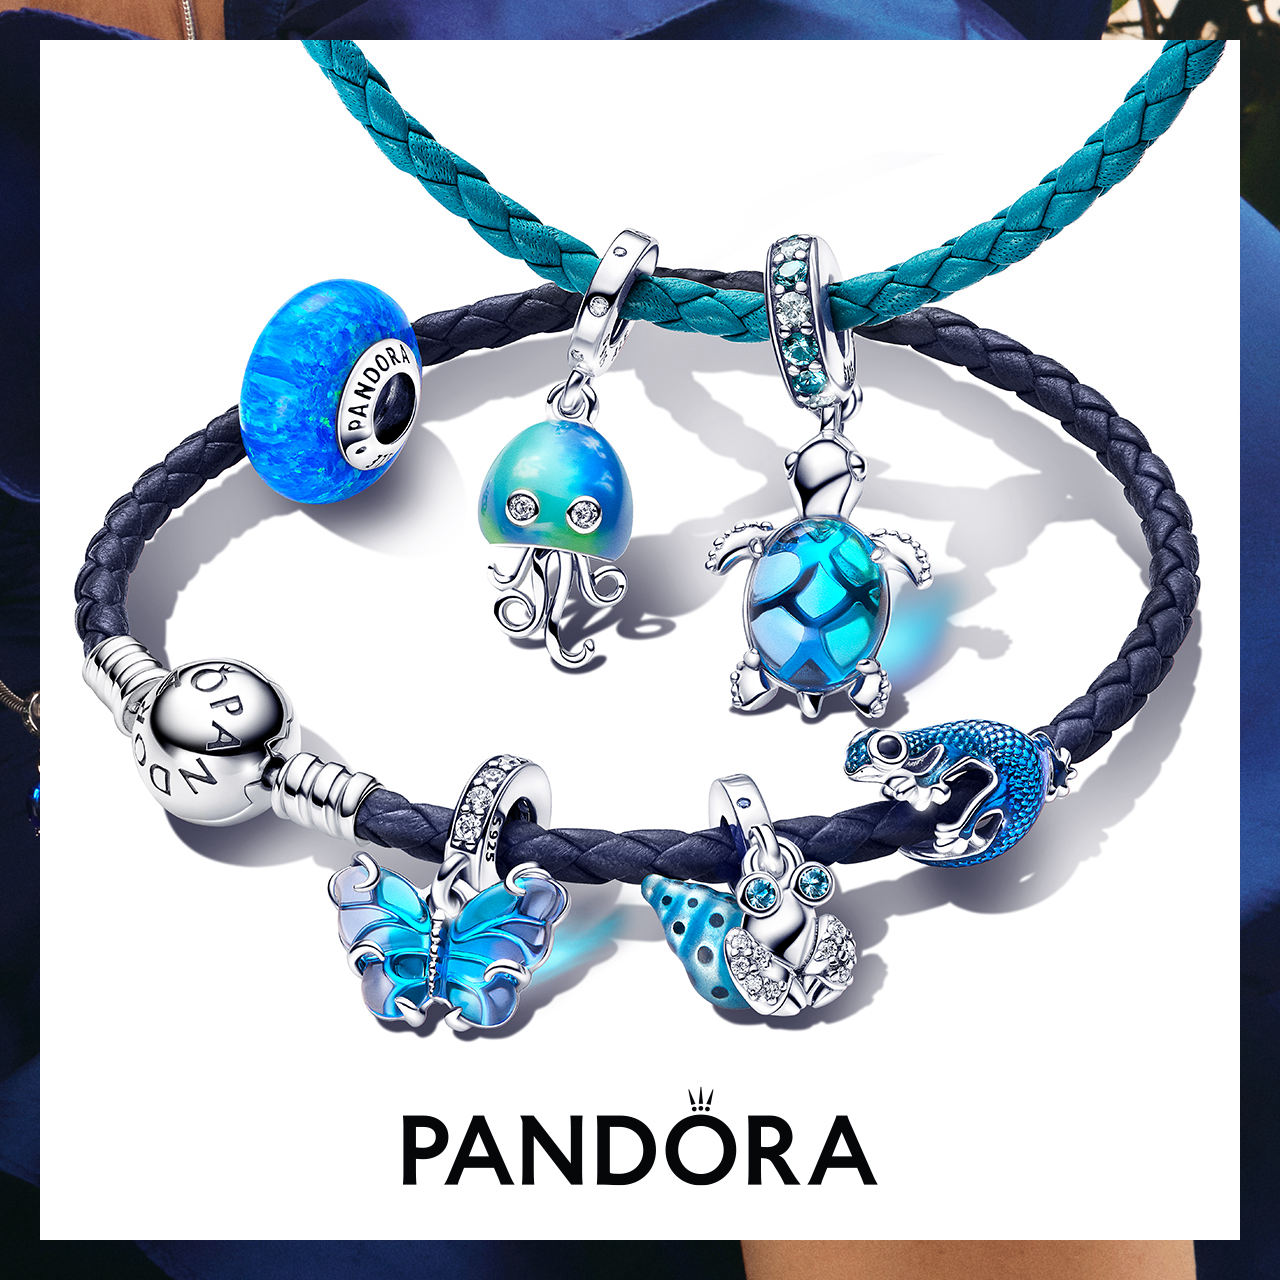 Celebrate summer with Pandora!